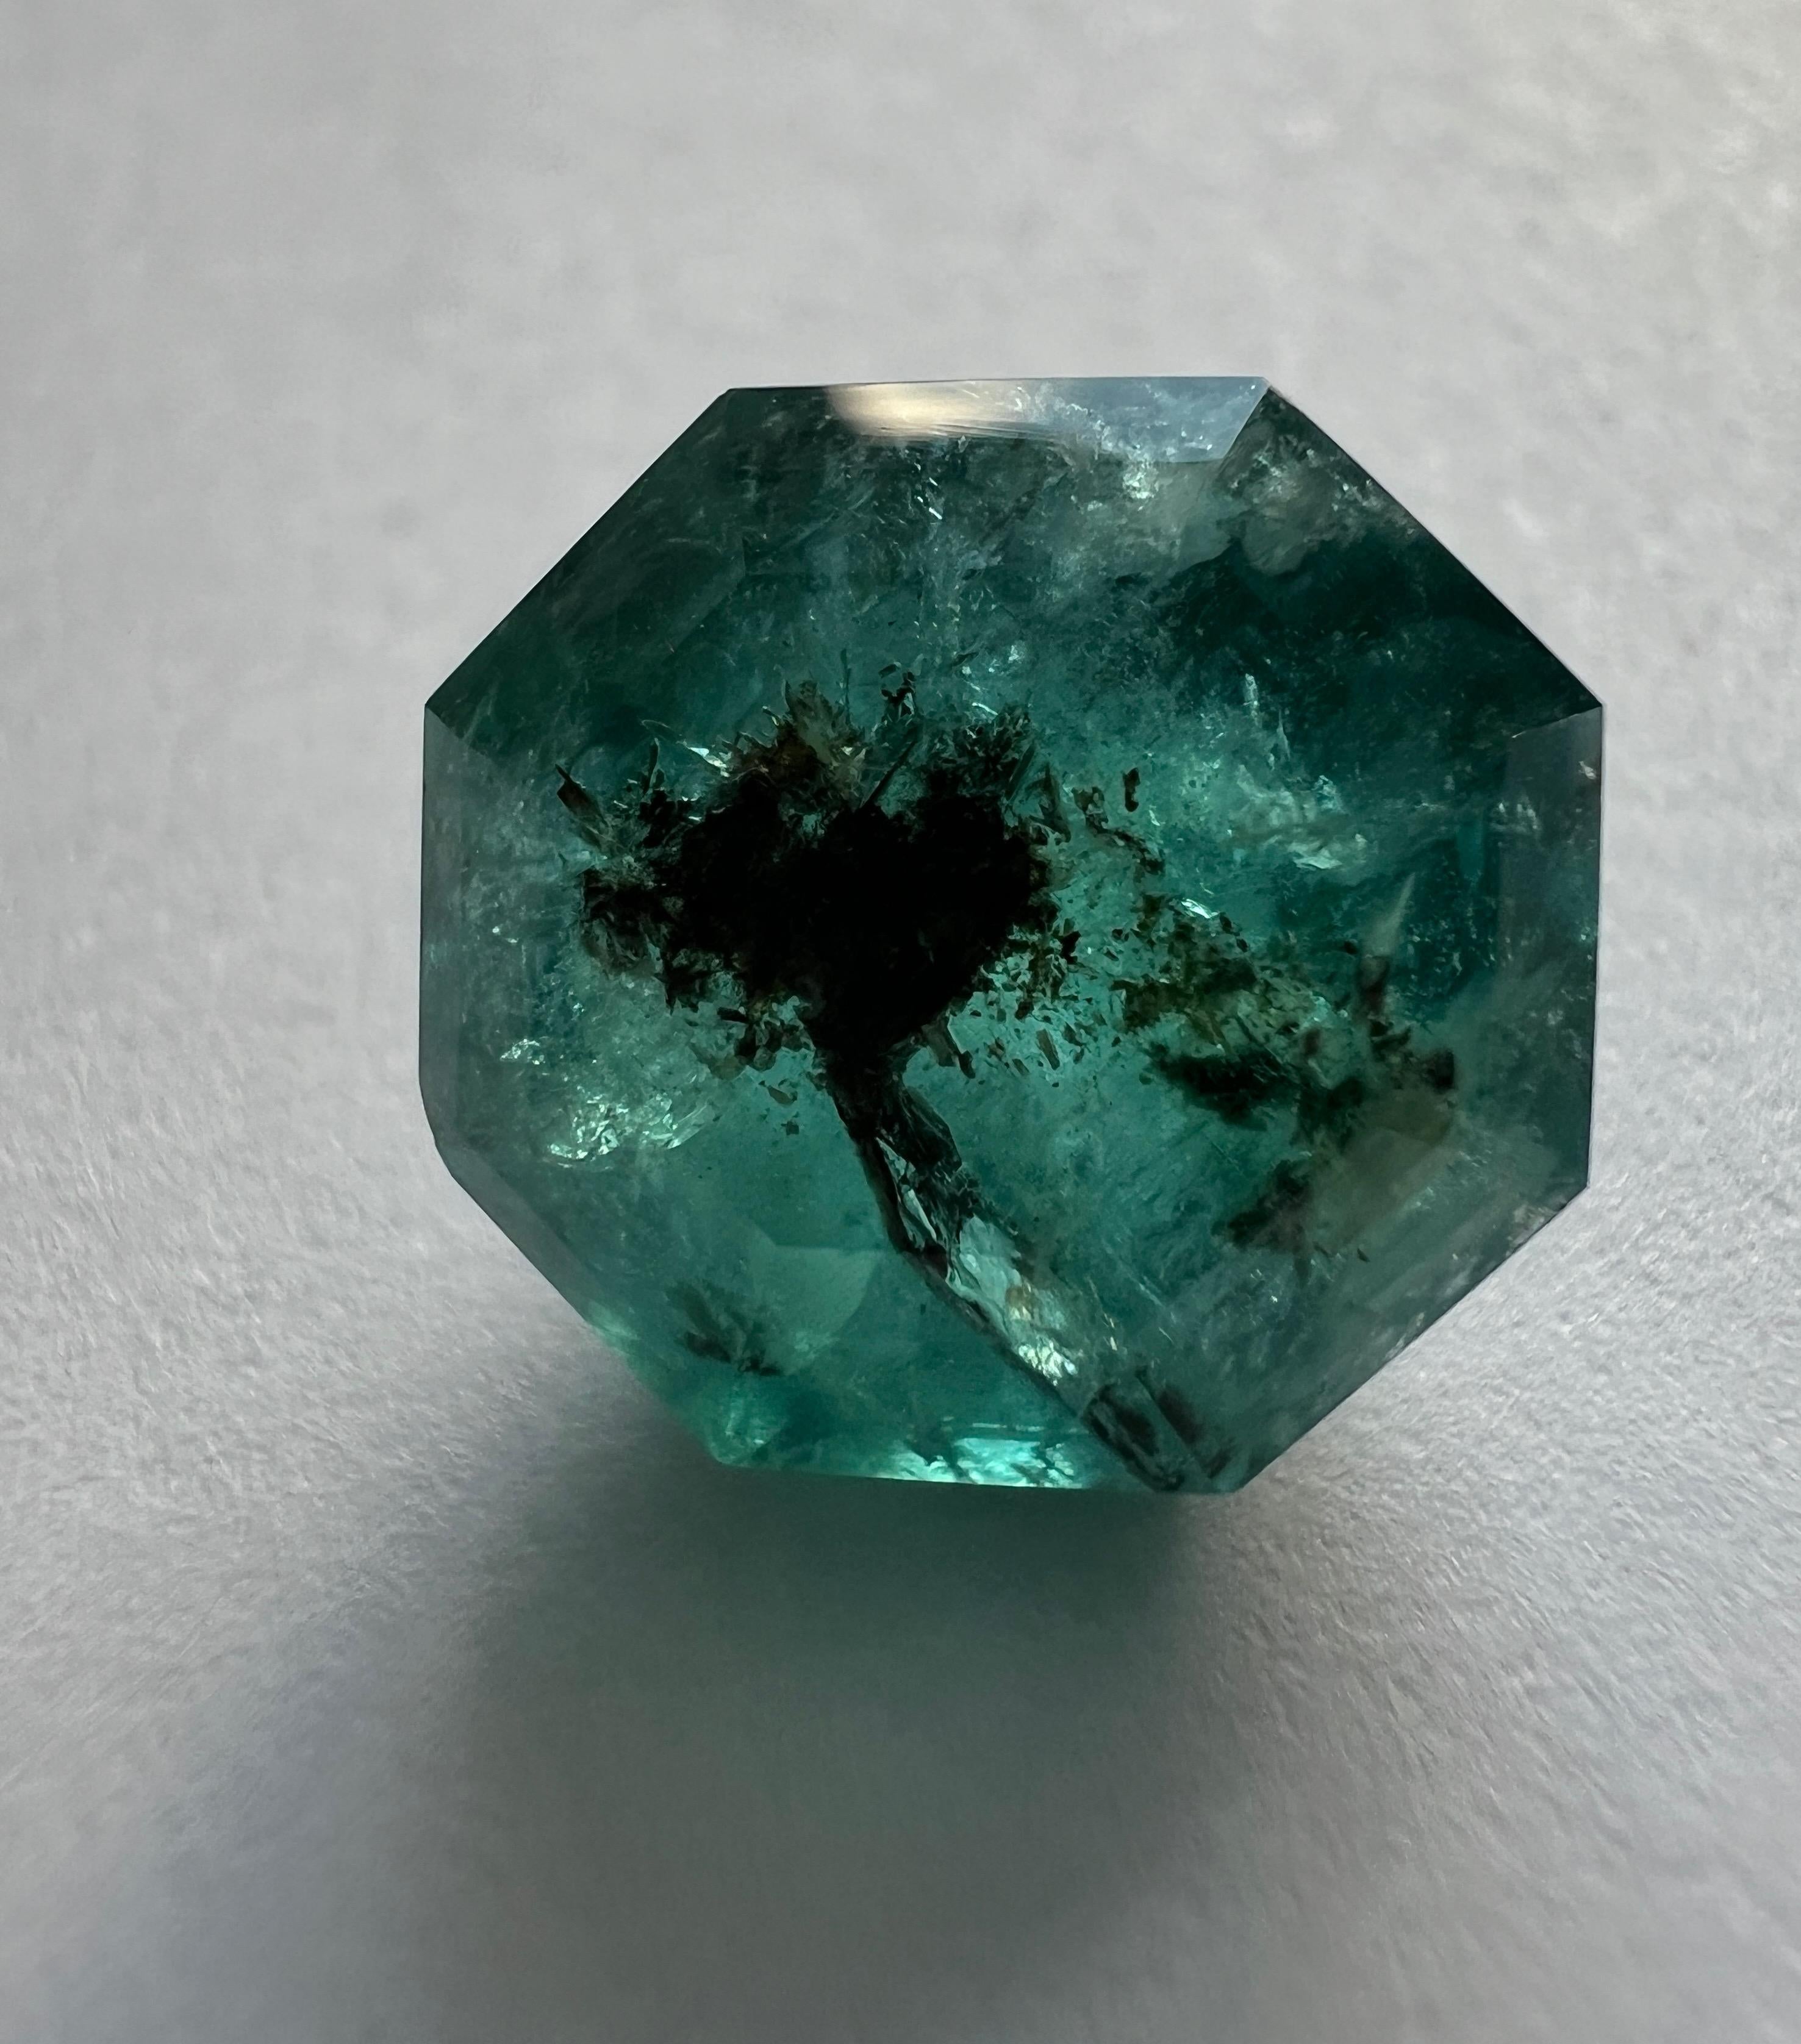 8.85ct Asscher Cut No-Oil Natural Untreated Emerald Gemstone For Sale 7